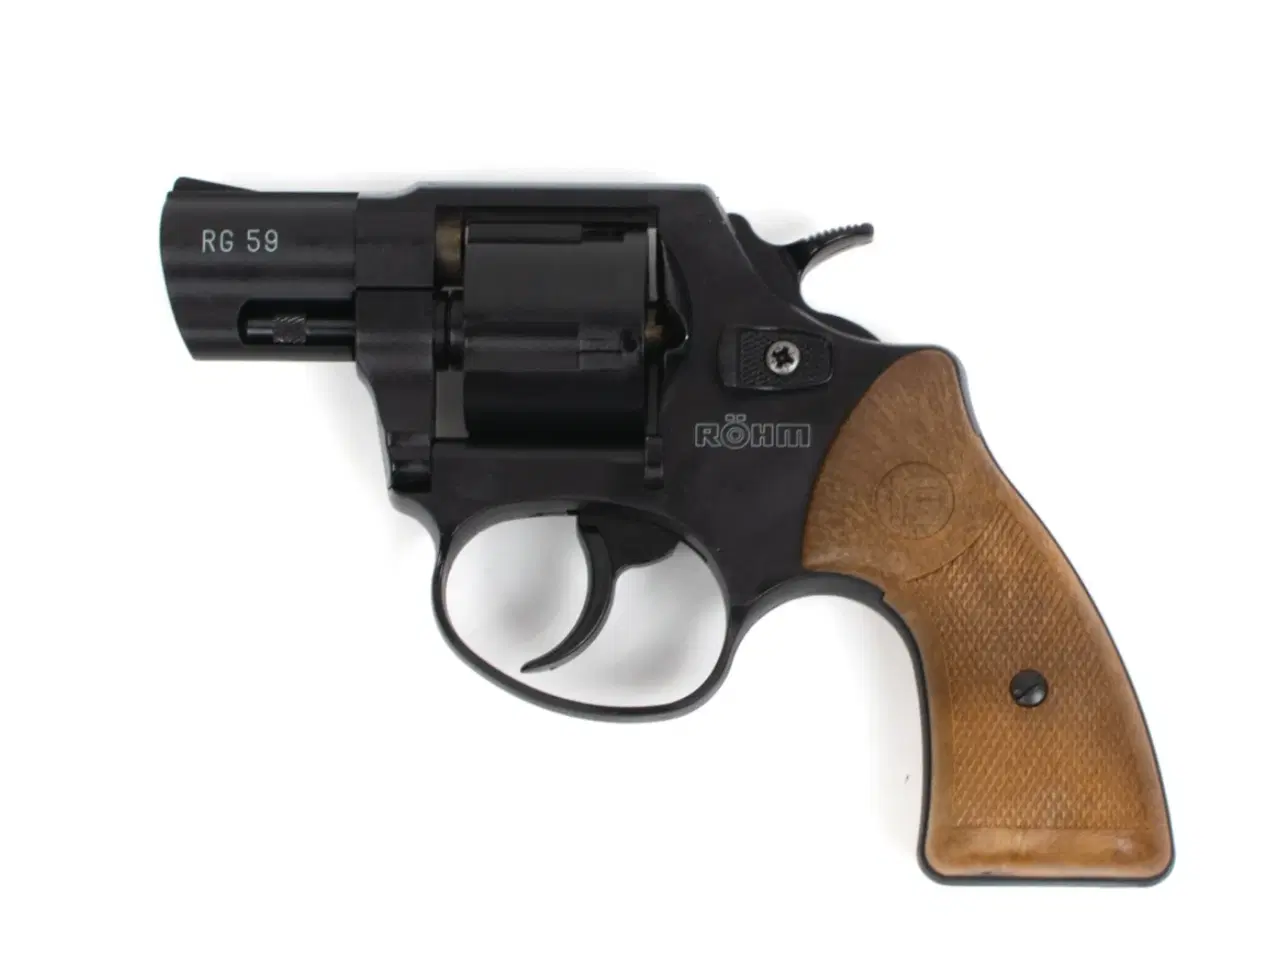 Billede 1 - Røhm RG59 signal pistol